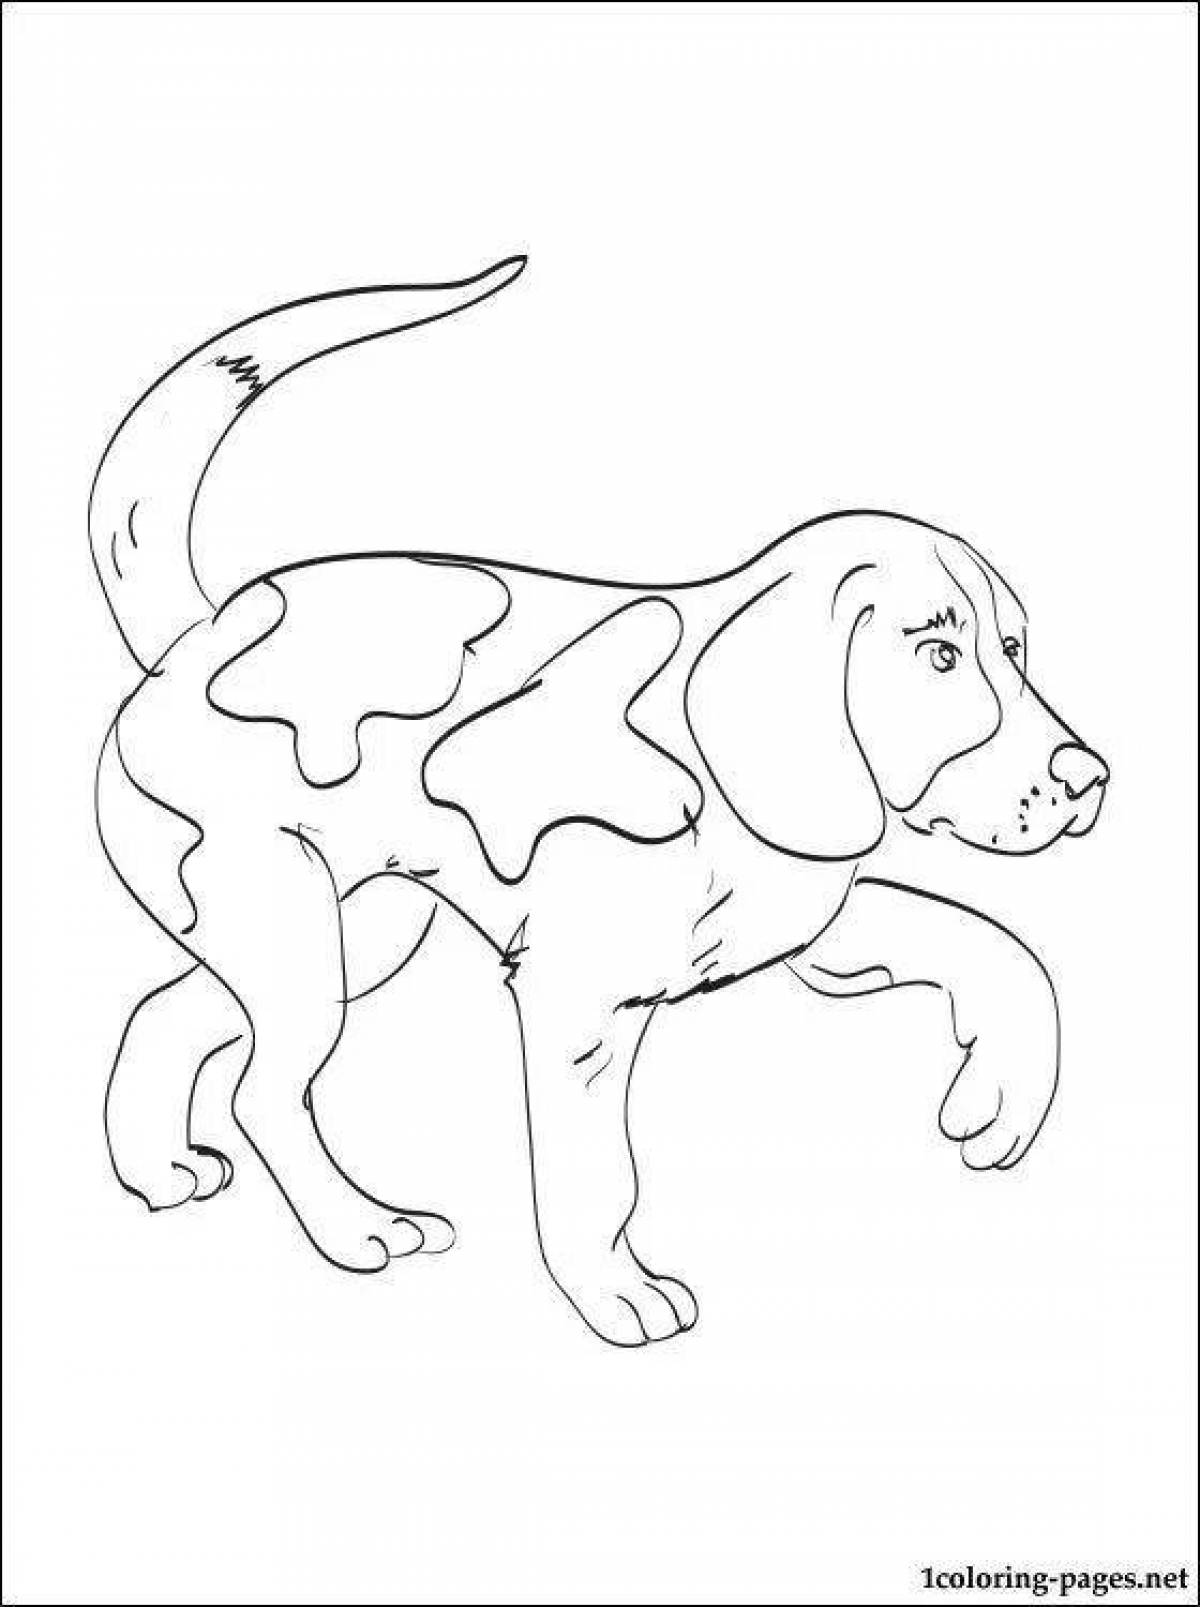 Attractive beagle coloring book